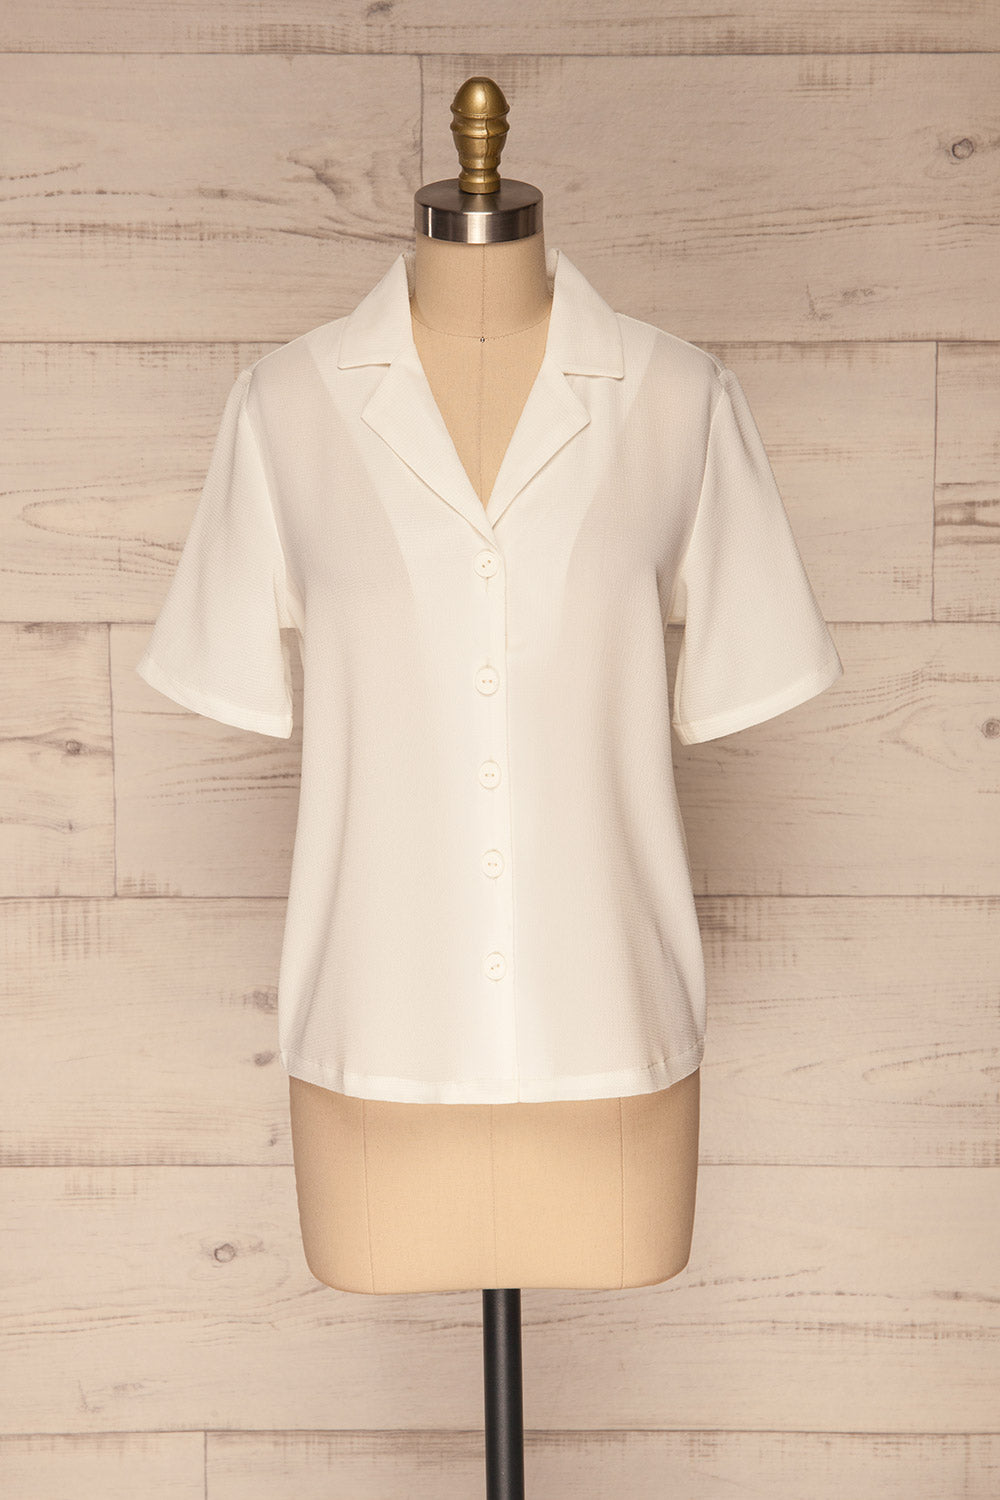 Rosarno White Crepe Short Sleeved Shirt | La petite garçonne front view 